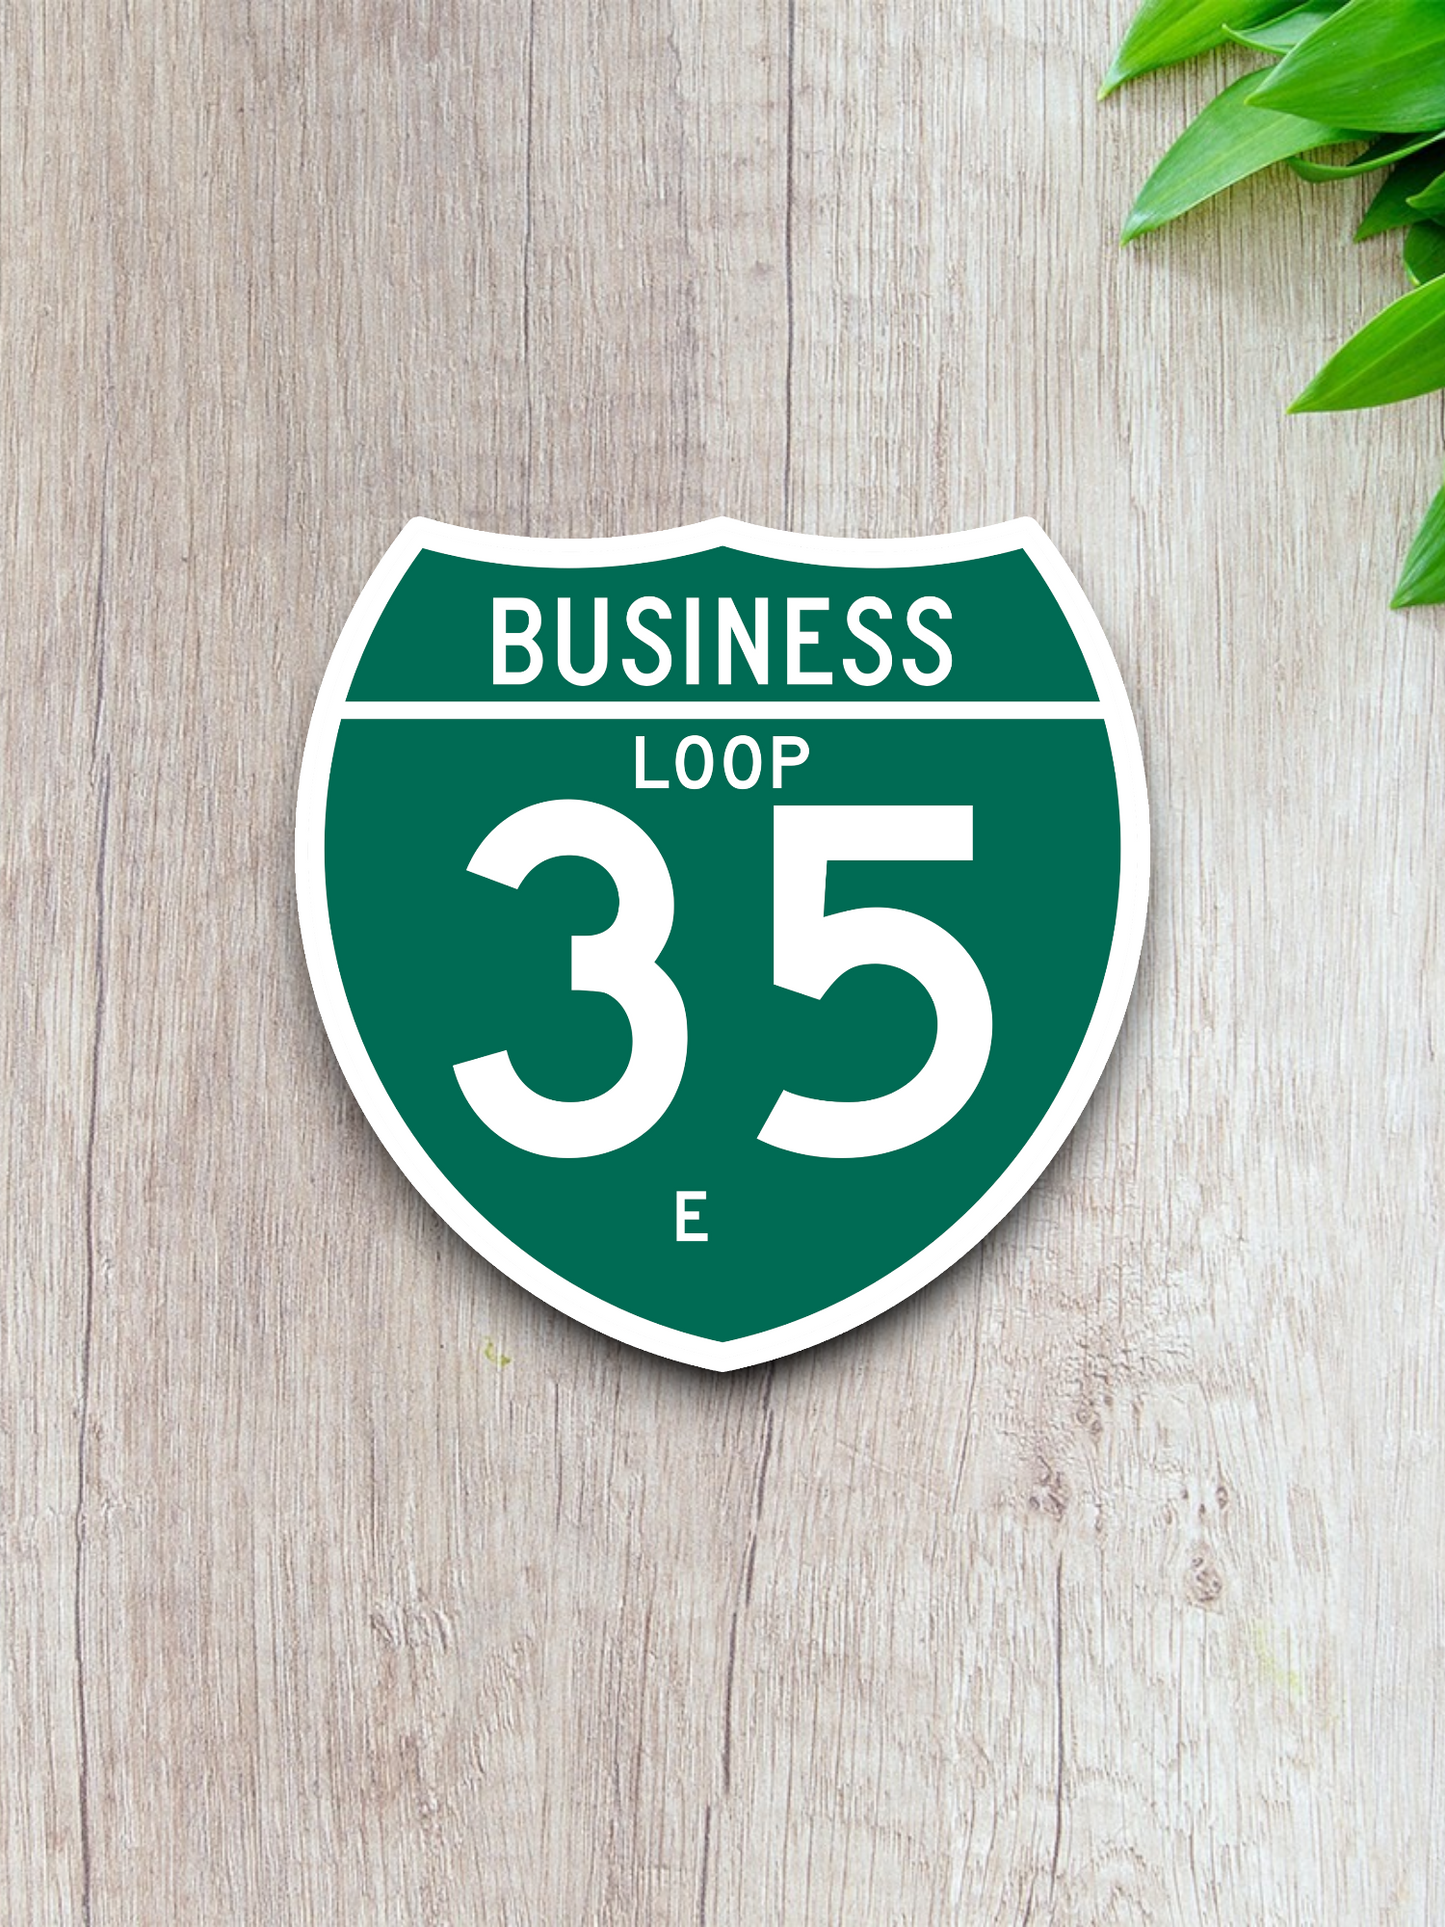 Business Spur Interstate 35-E Texas Road Sign Sticker